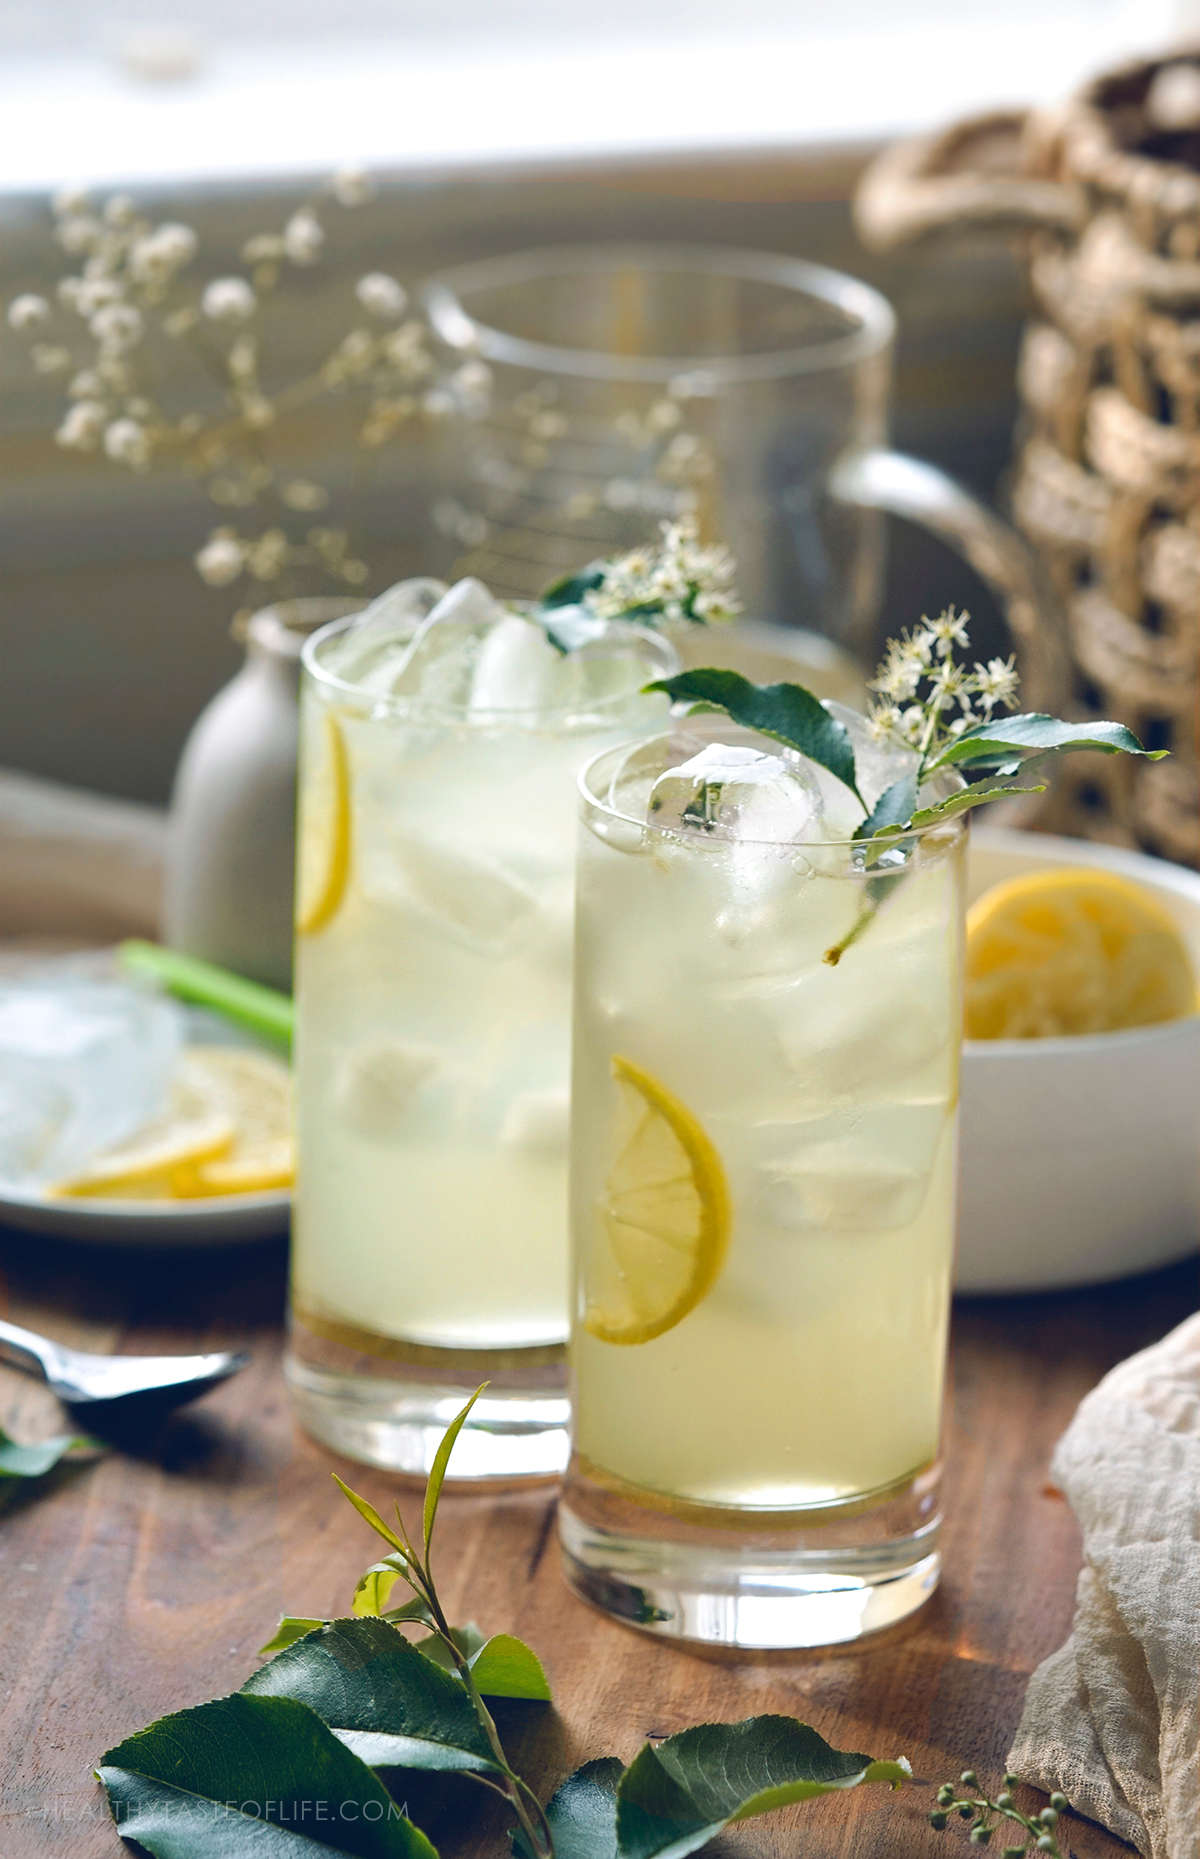 Close up shot of elderflower lemonade with ice and garnished with lemon and elderflower leaves.